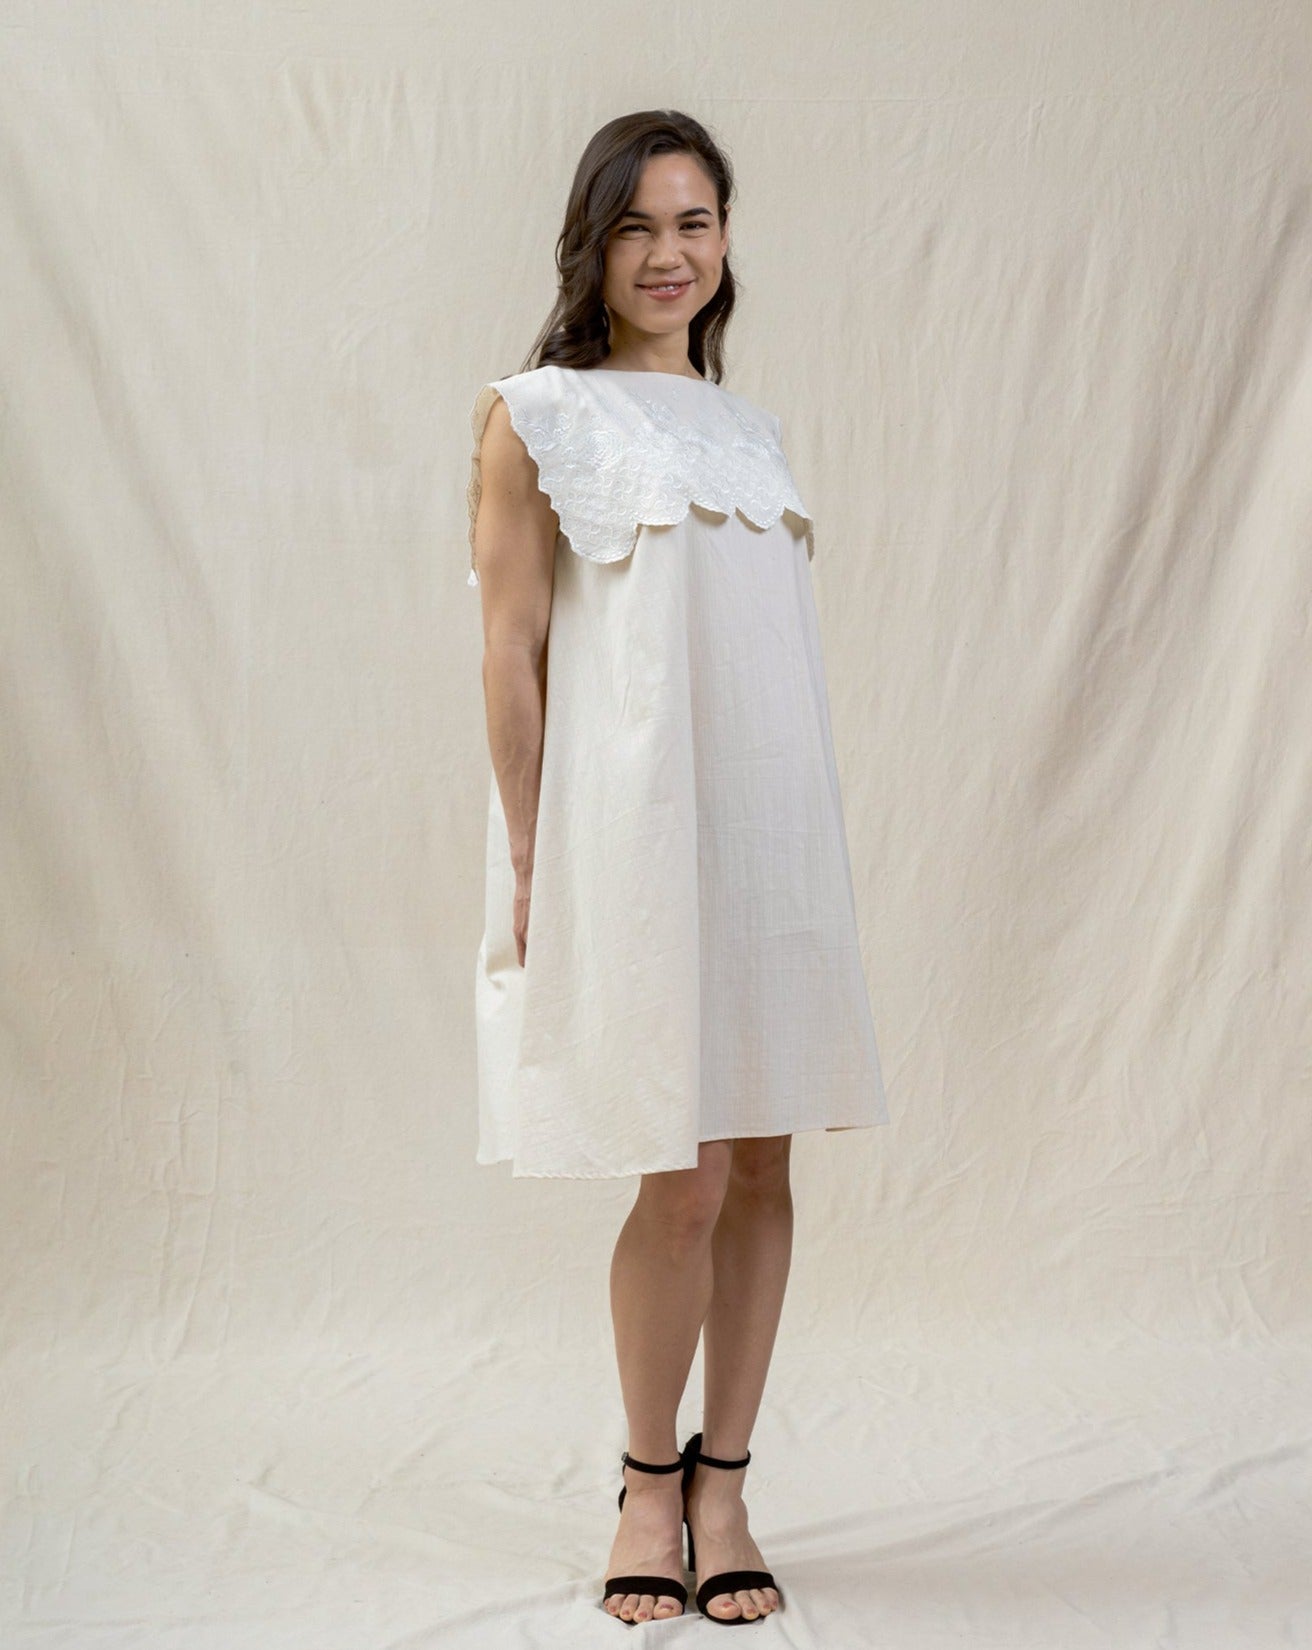 white bib dress from regenerative cotton